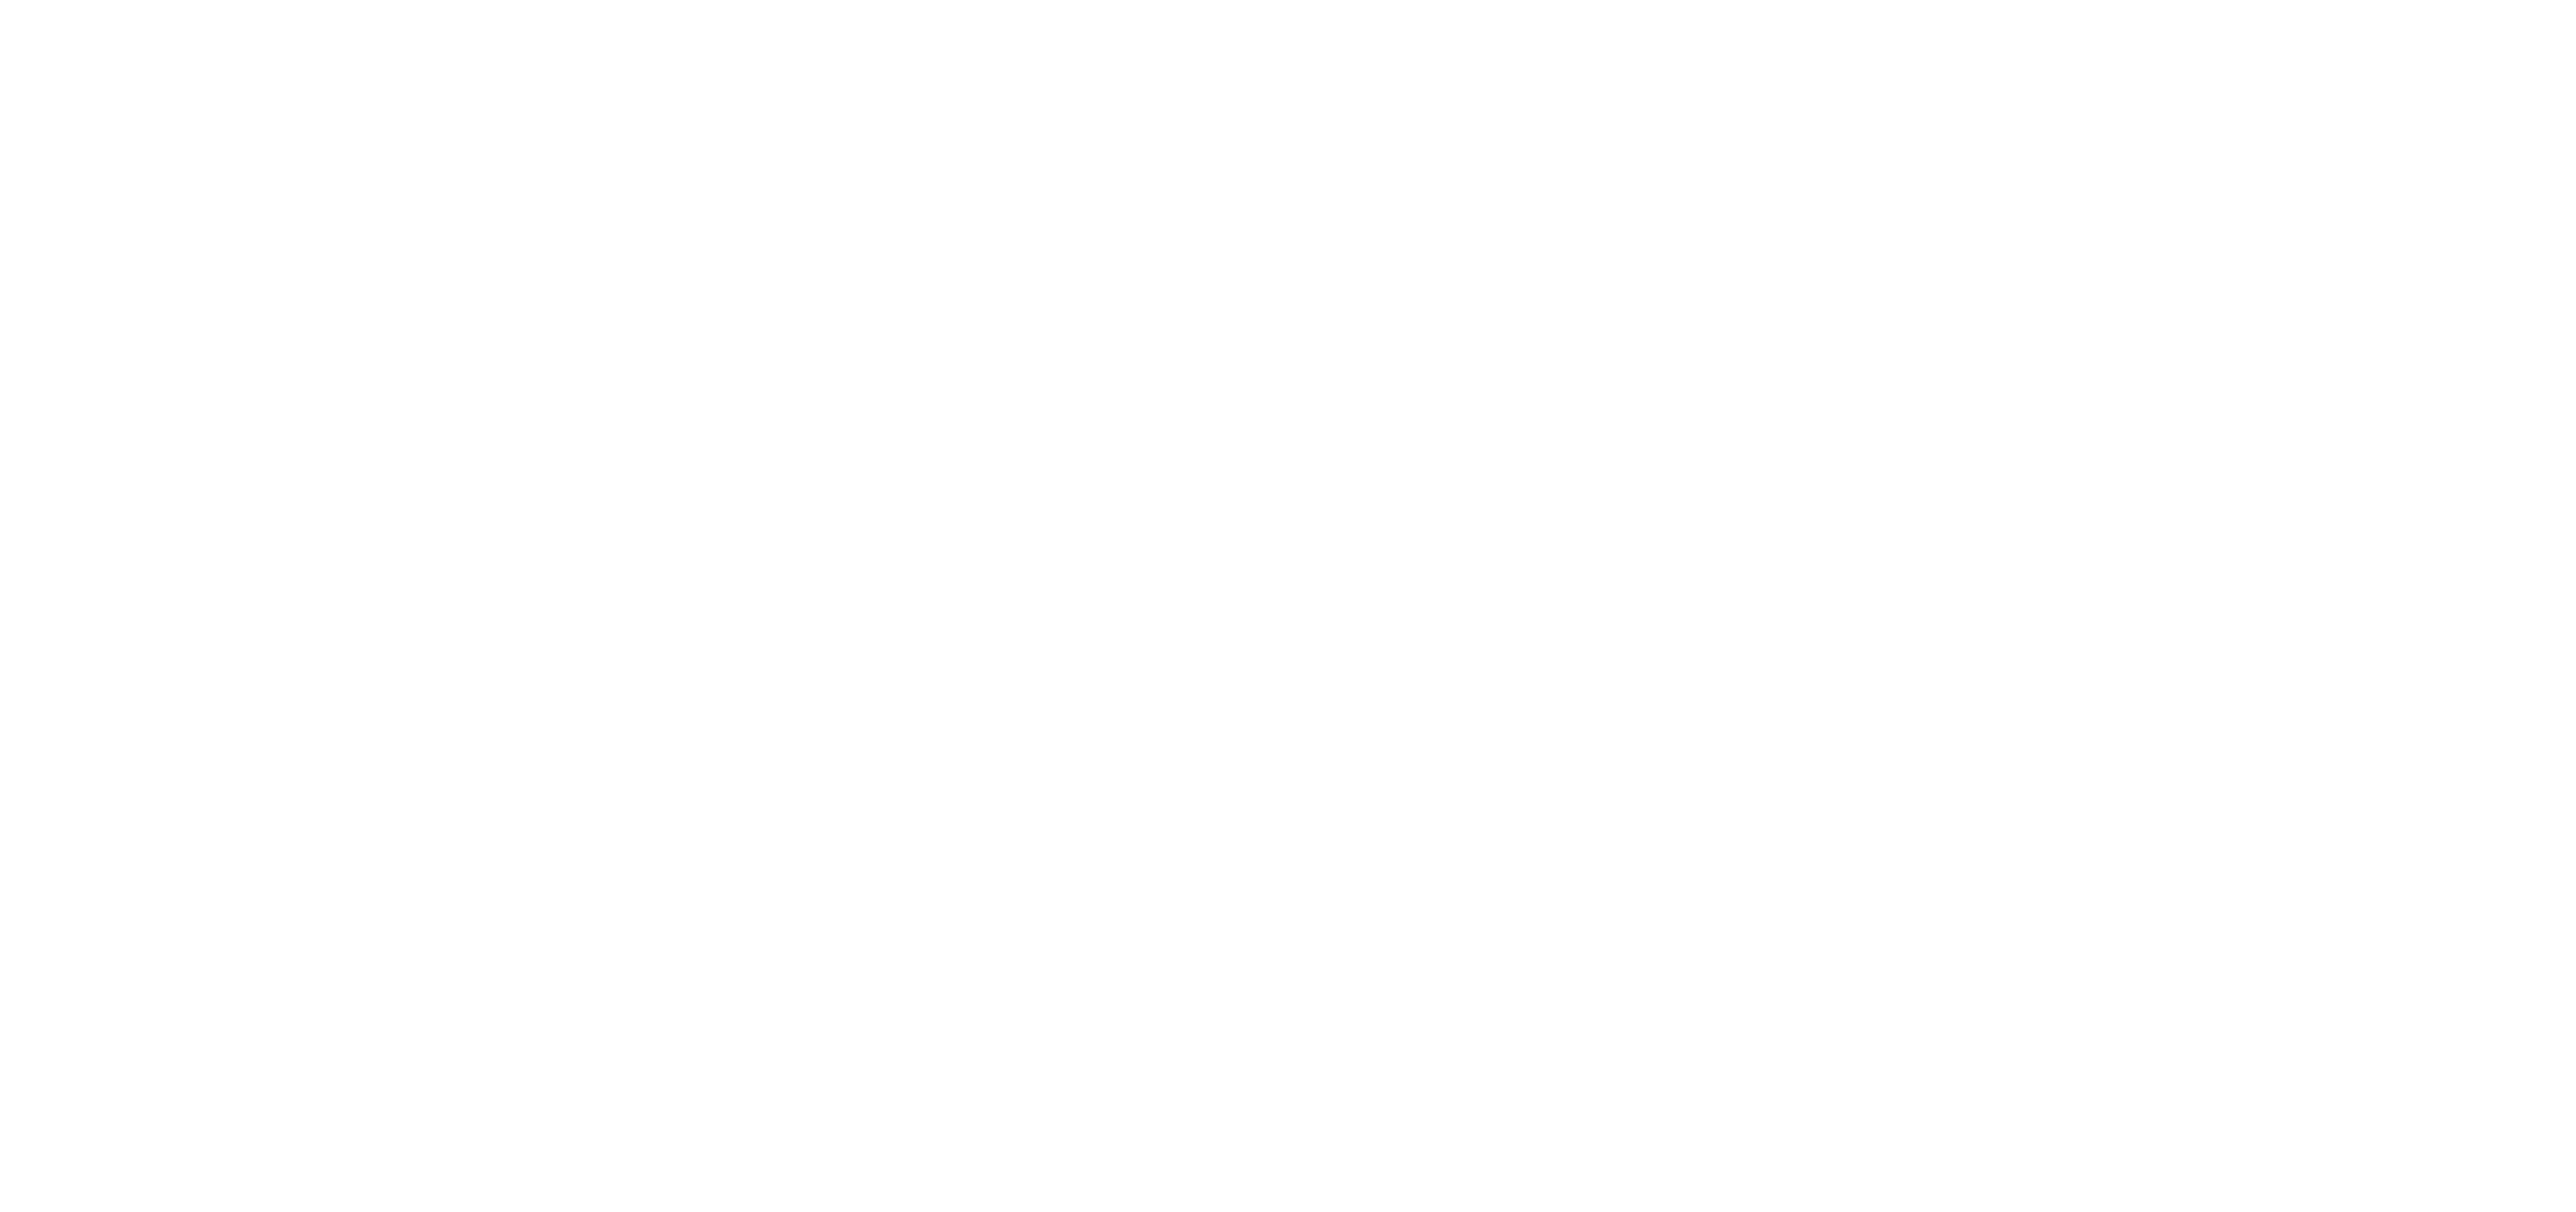 Thomas Dunn Learning Center